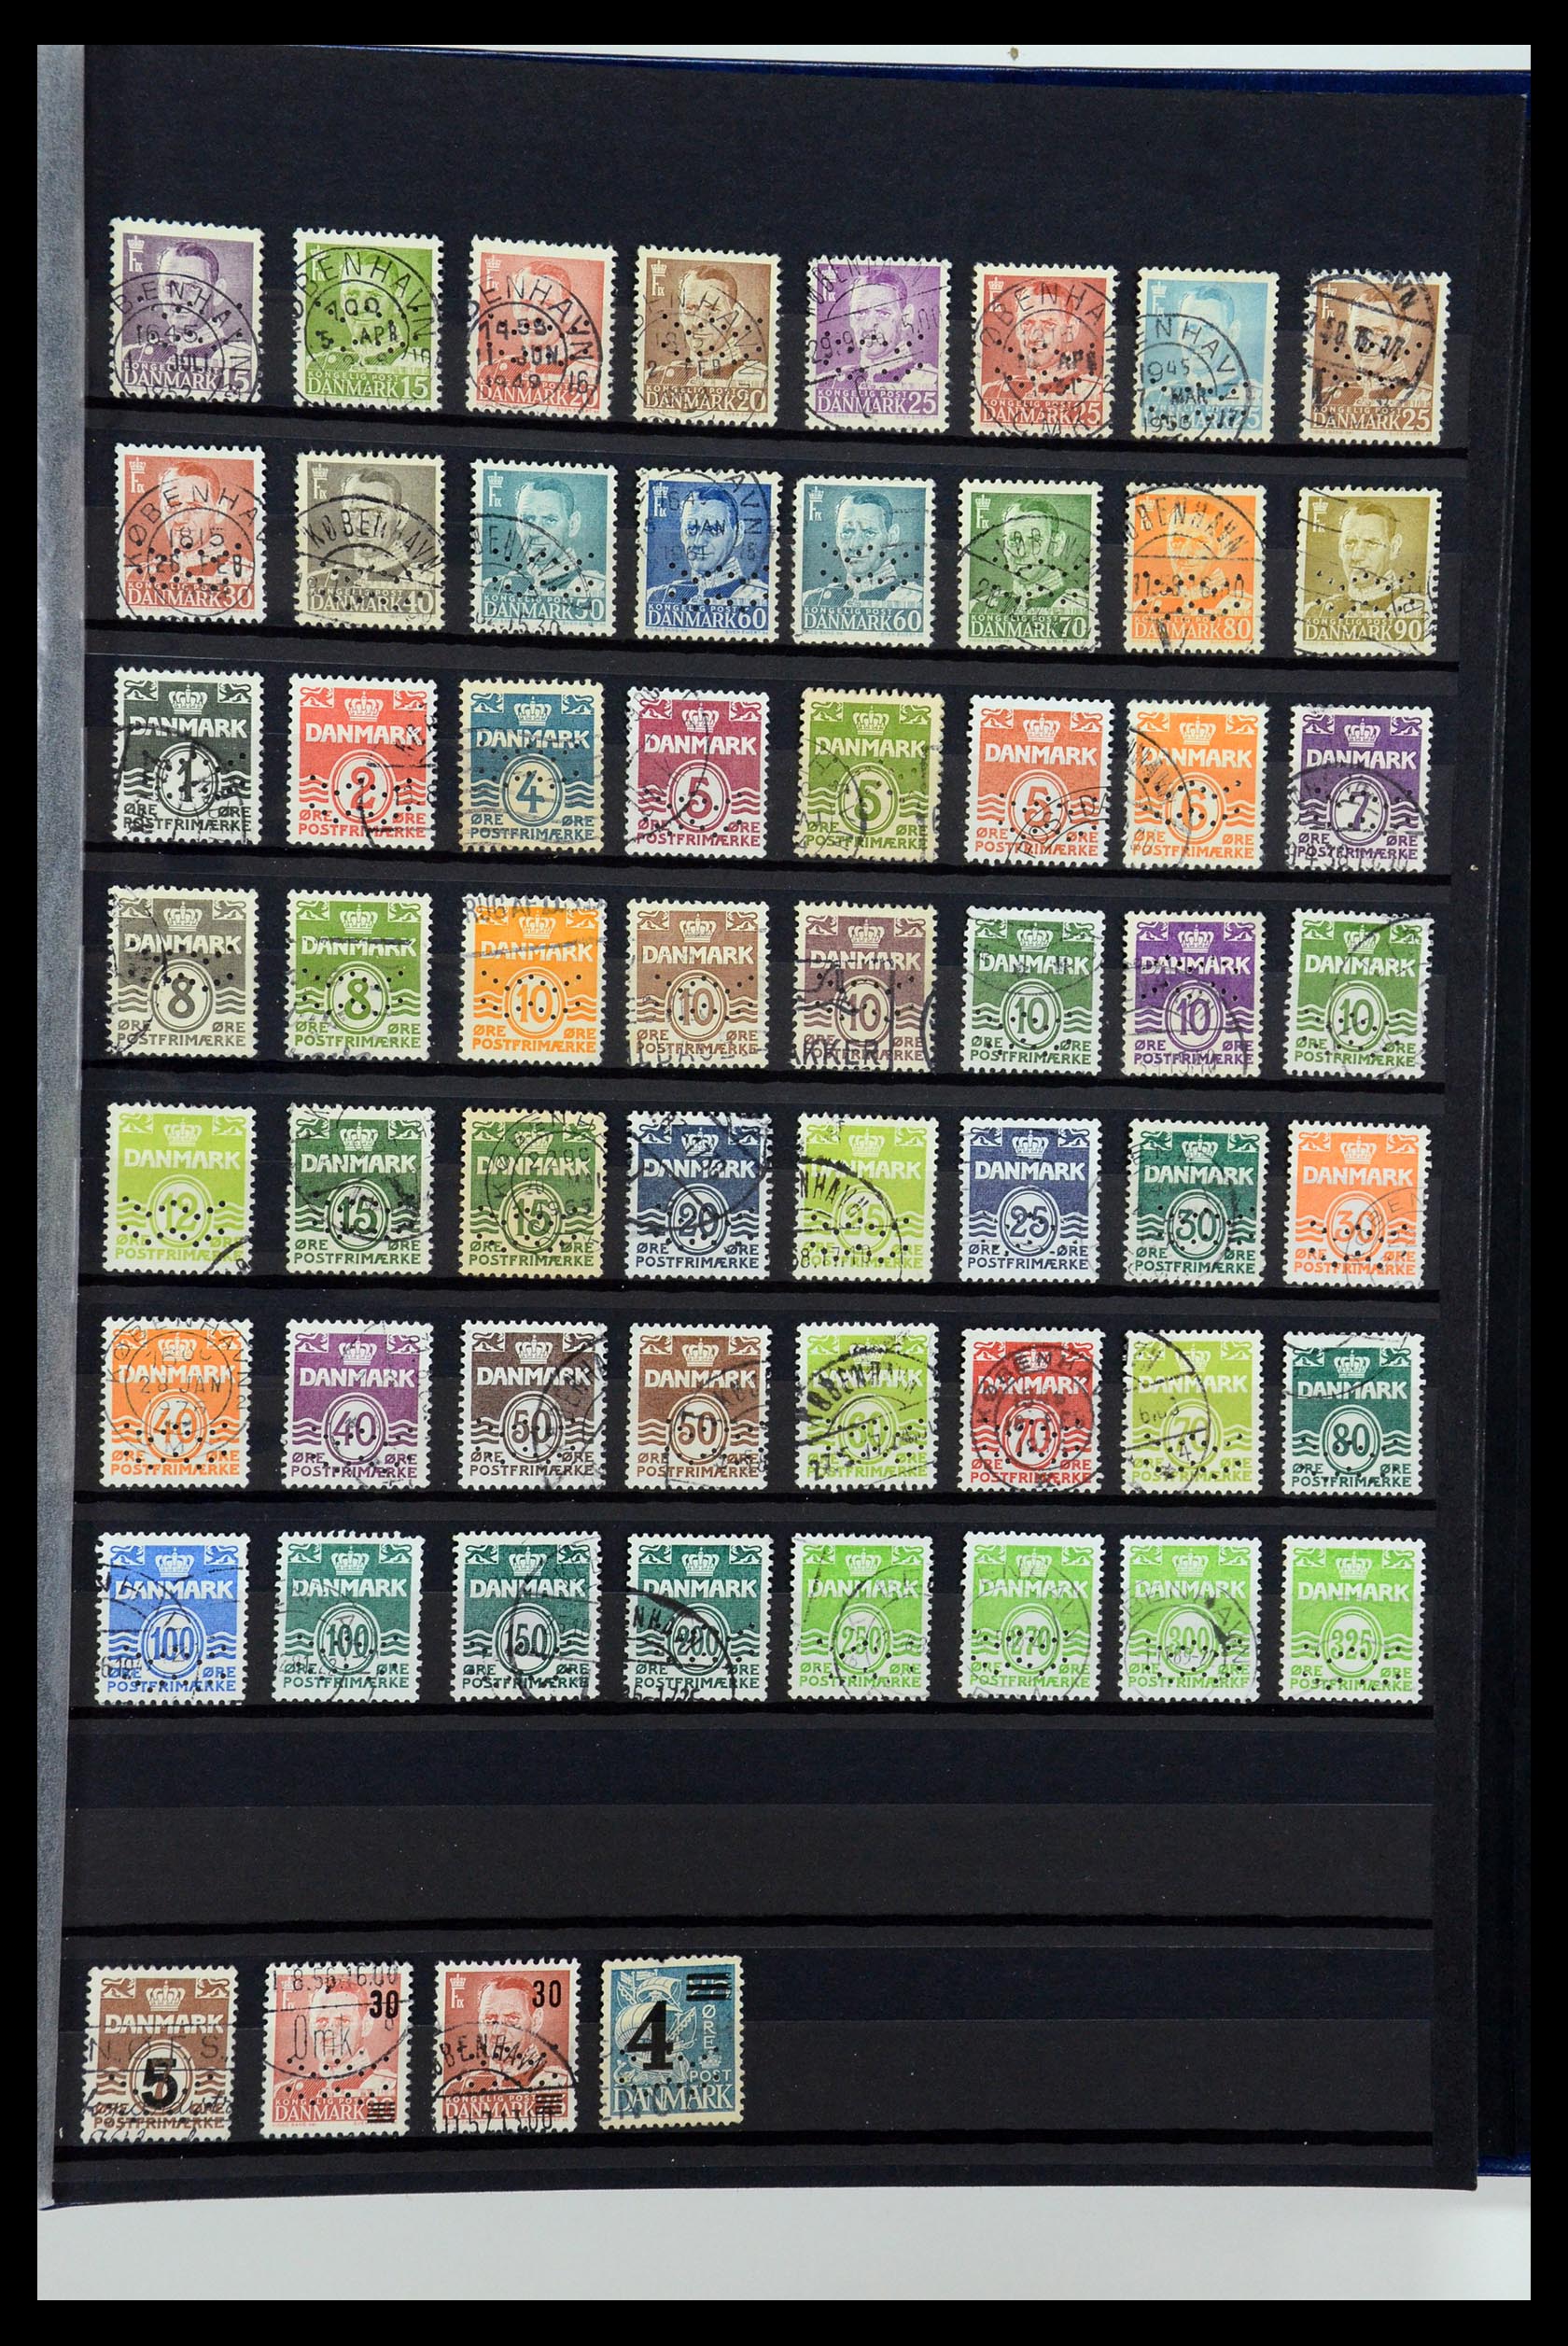 36396 231 - Stamp collection 36396 Denmark perfins.